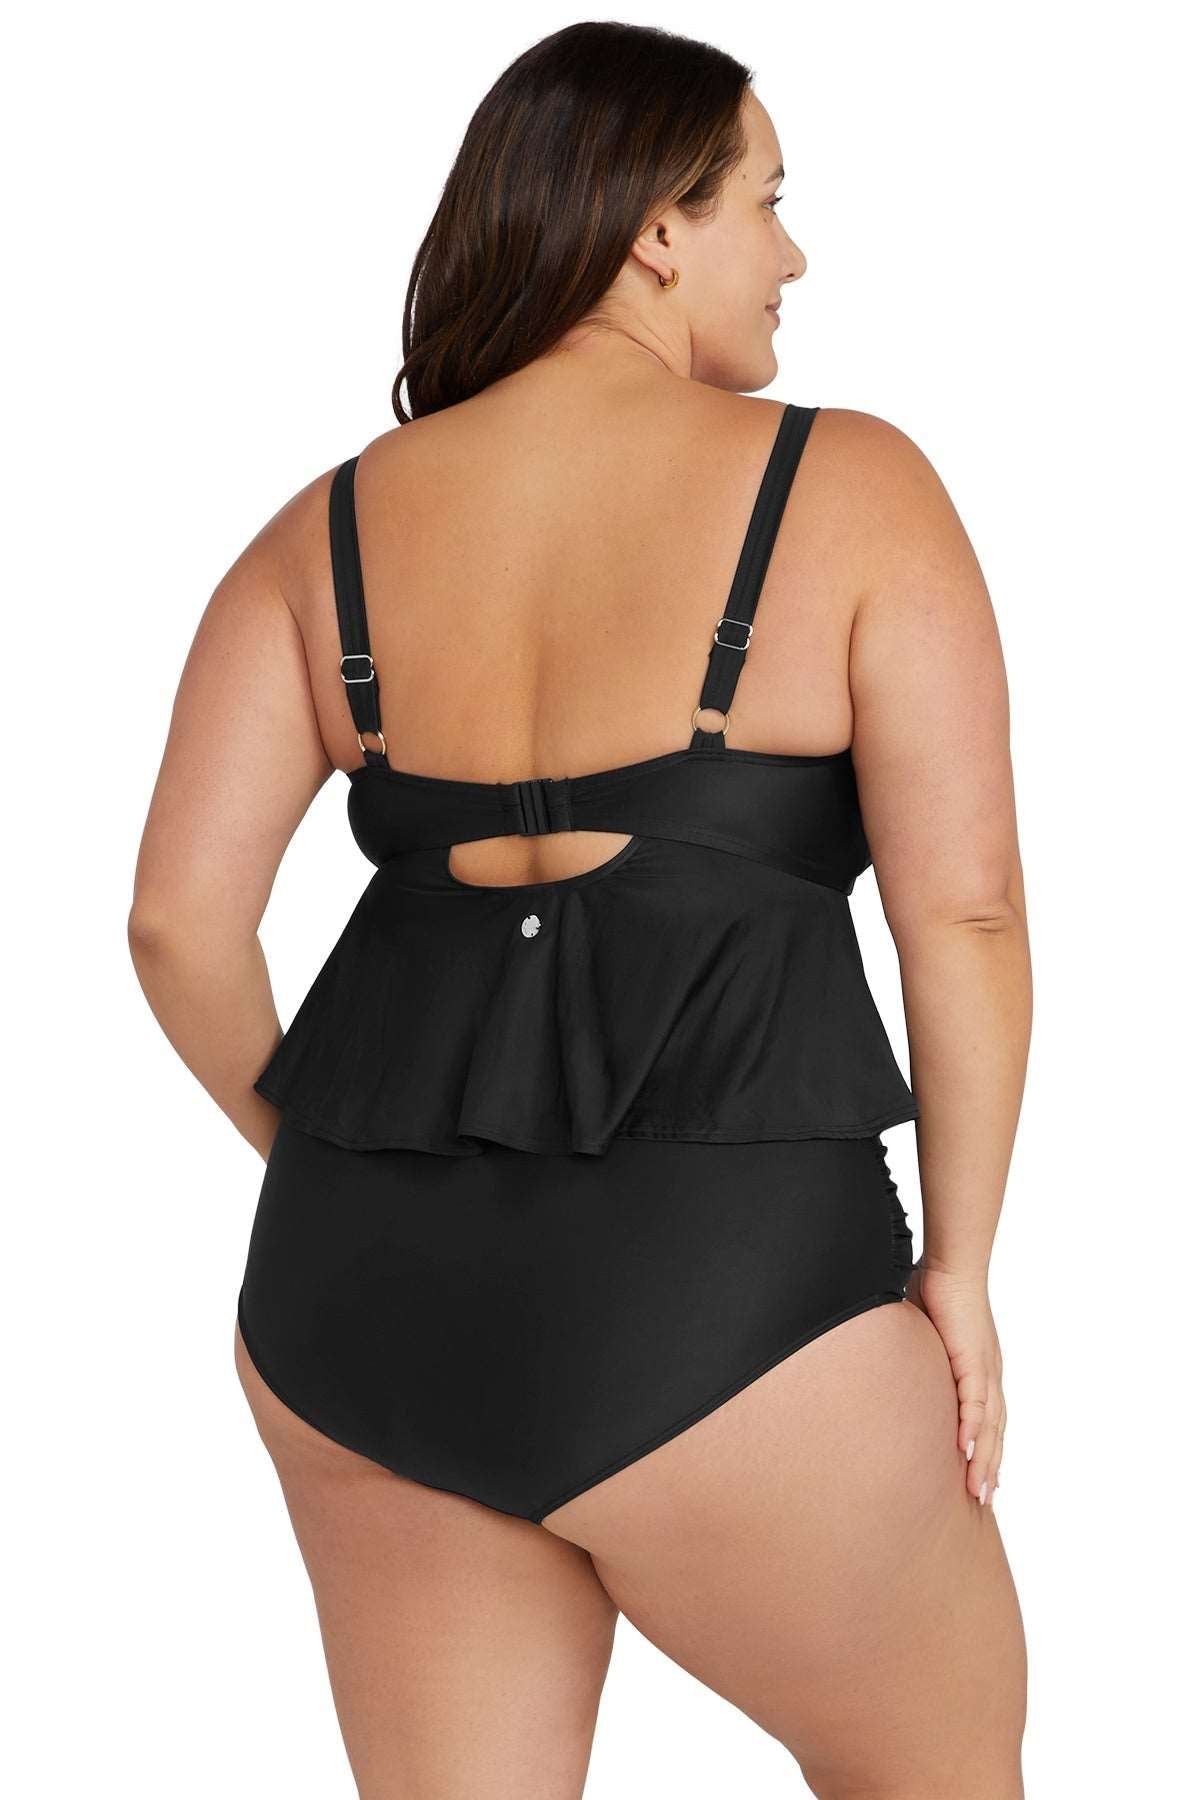 Artesands curvy plus size bikini top midriff swimsuit back 